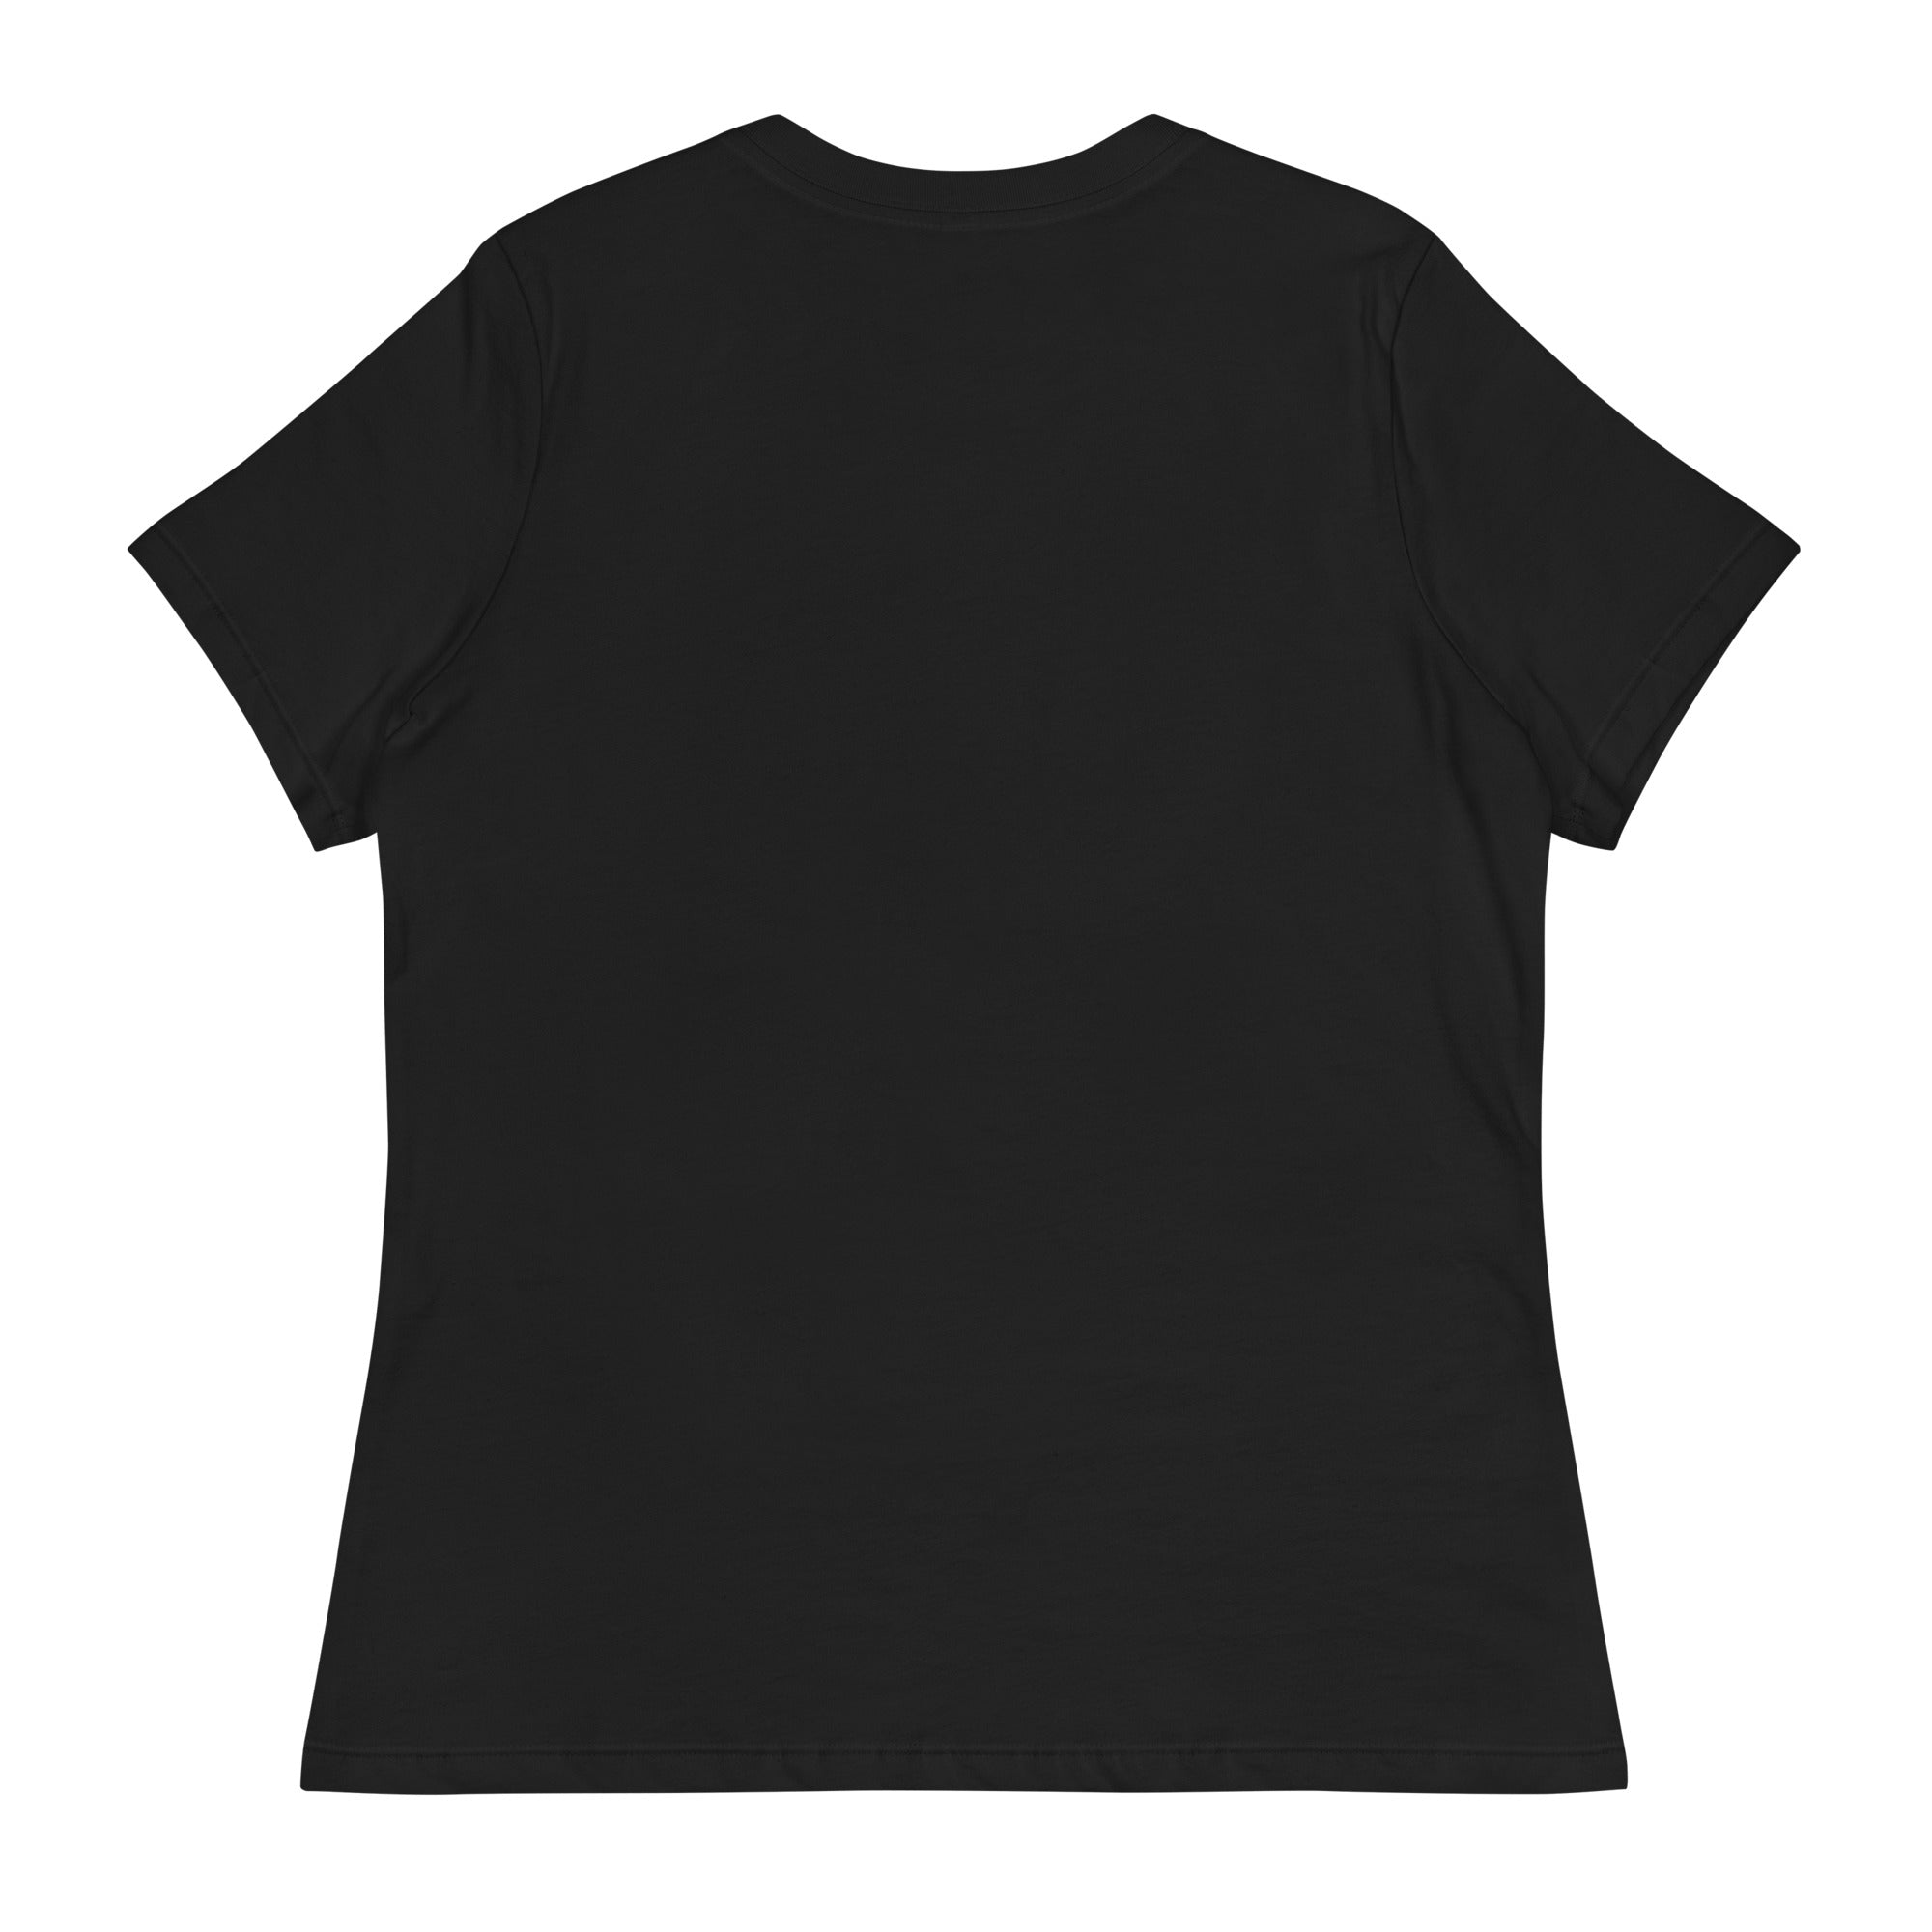 ESPRESSO - Women's Relaxed Fit Graphic T-Shirt in 16 Colors - Women's Relaxed Fit Graphic T-Shirt - DRAGON FOXX™ - 7218598_10187 - Black - S - Athletic Heather T-shirt - Berry T-shirt - Black T-shirt